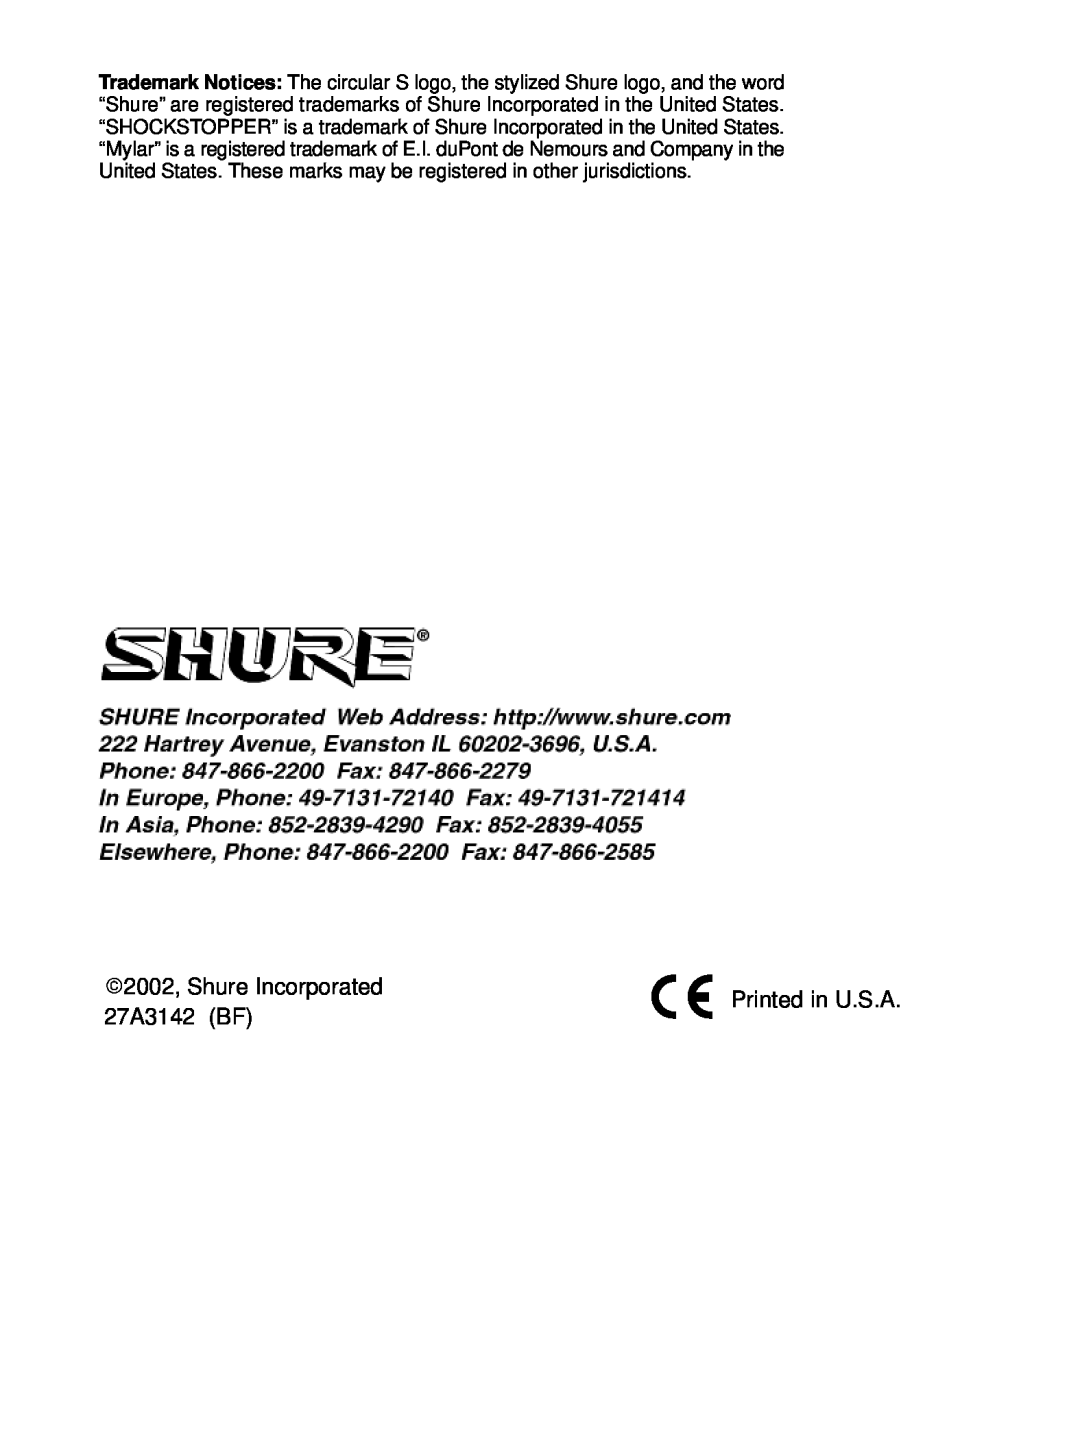 Shure KSM109 manual E2002, Shure Incorporated 27A3142 BF 